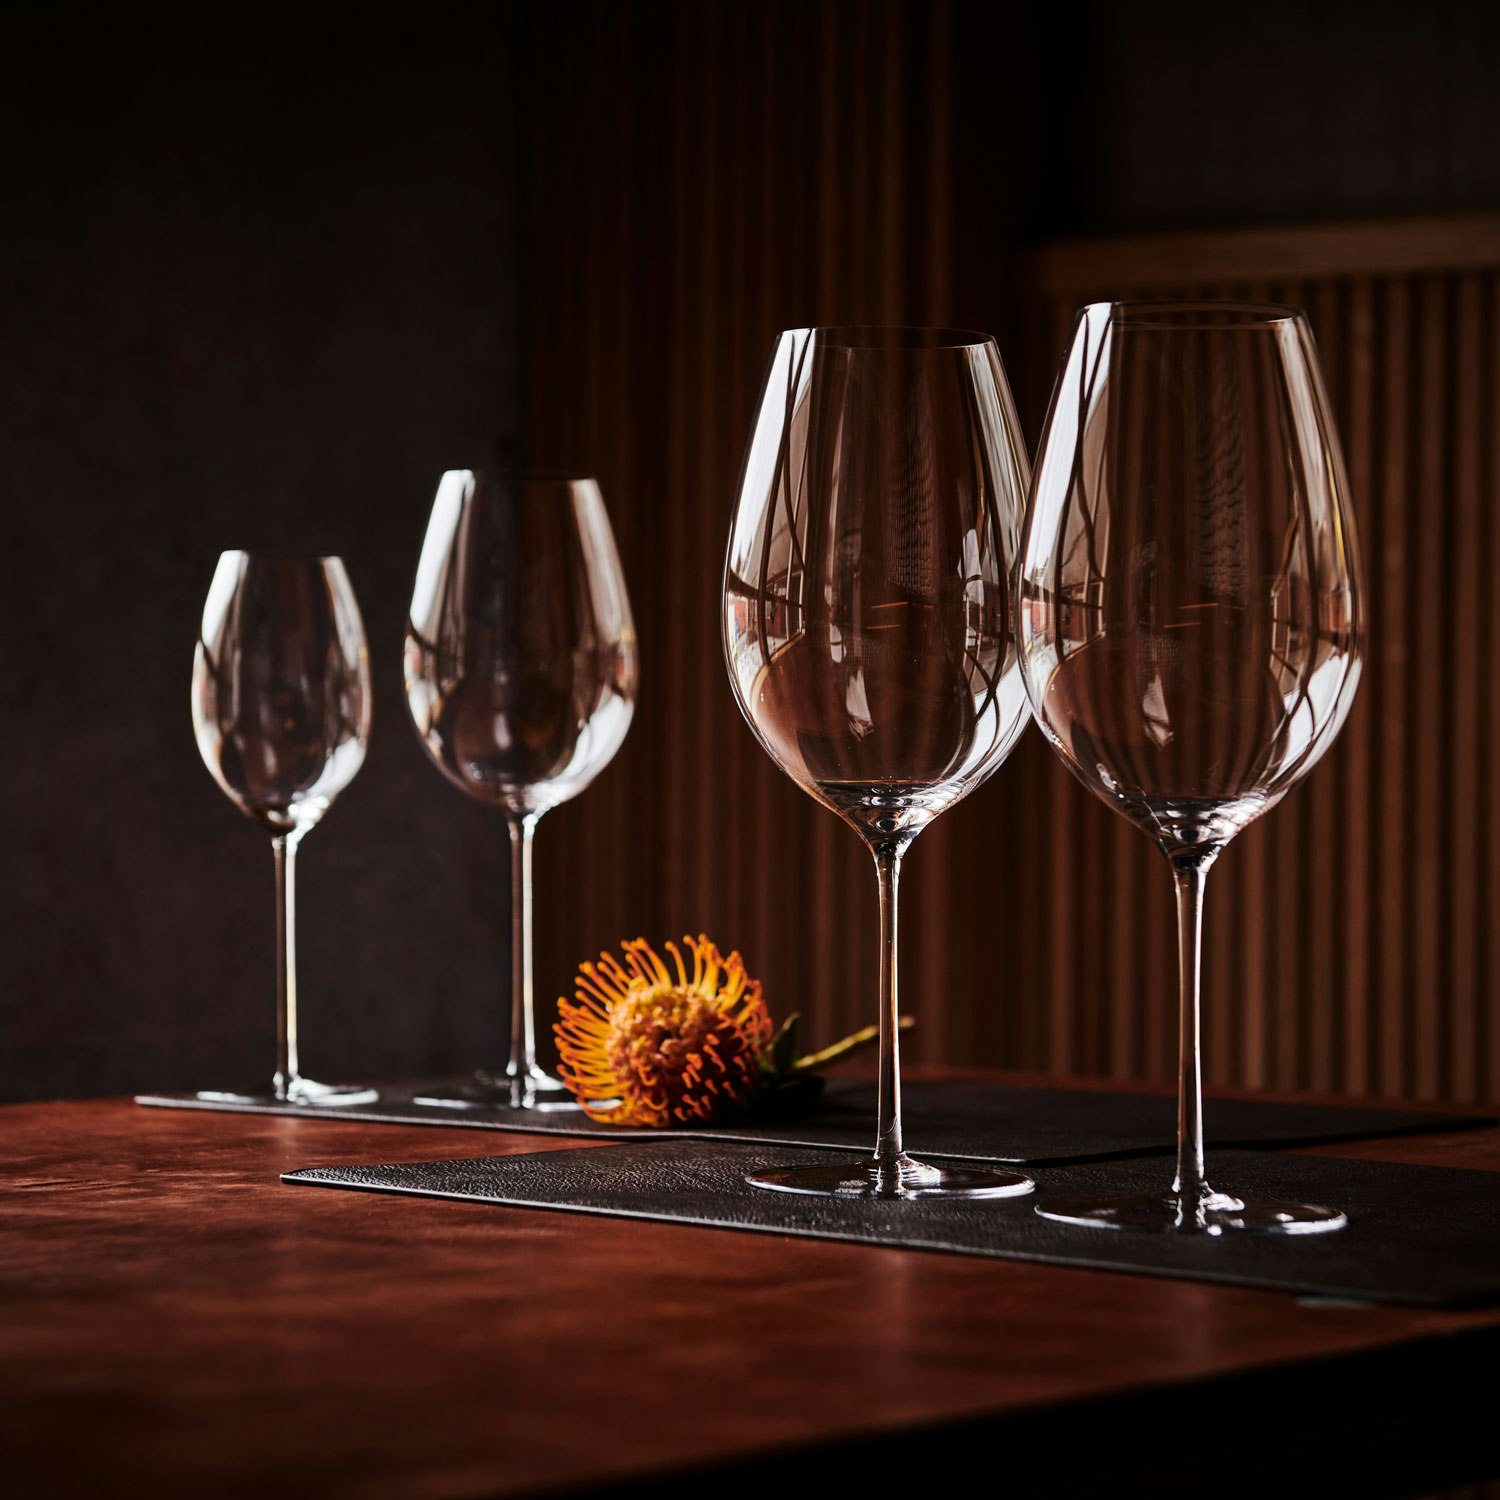 Enoteca Martini Glass 29 cl, 2-pack - Zwiesel @ RoyalDesign